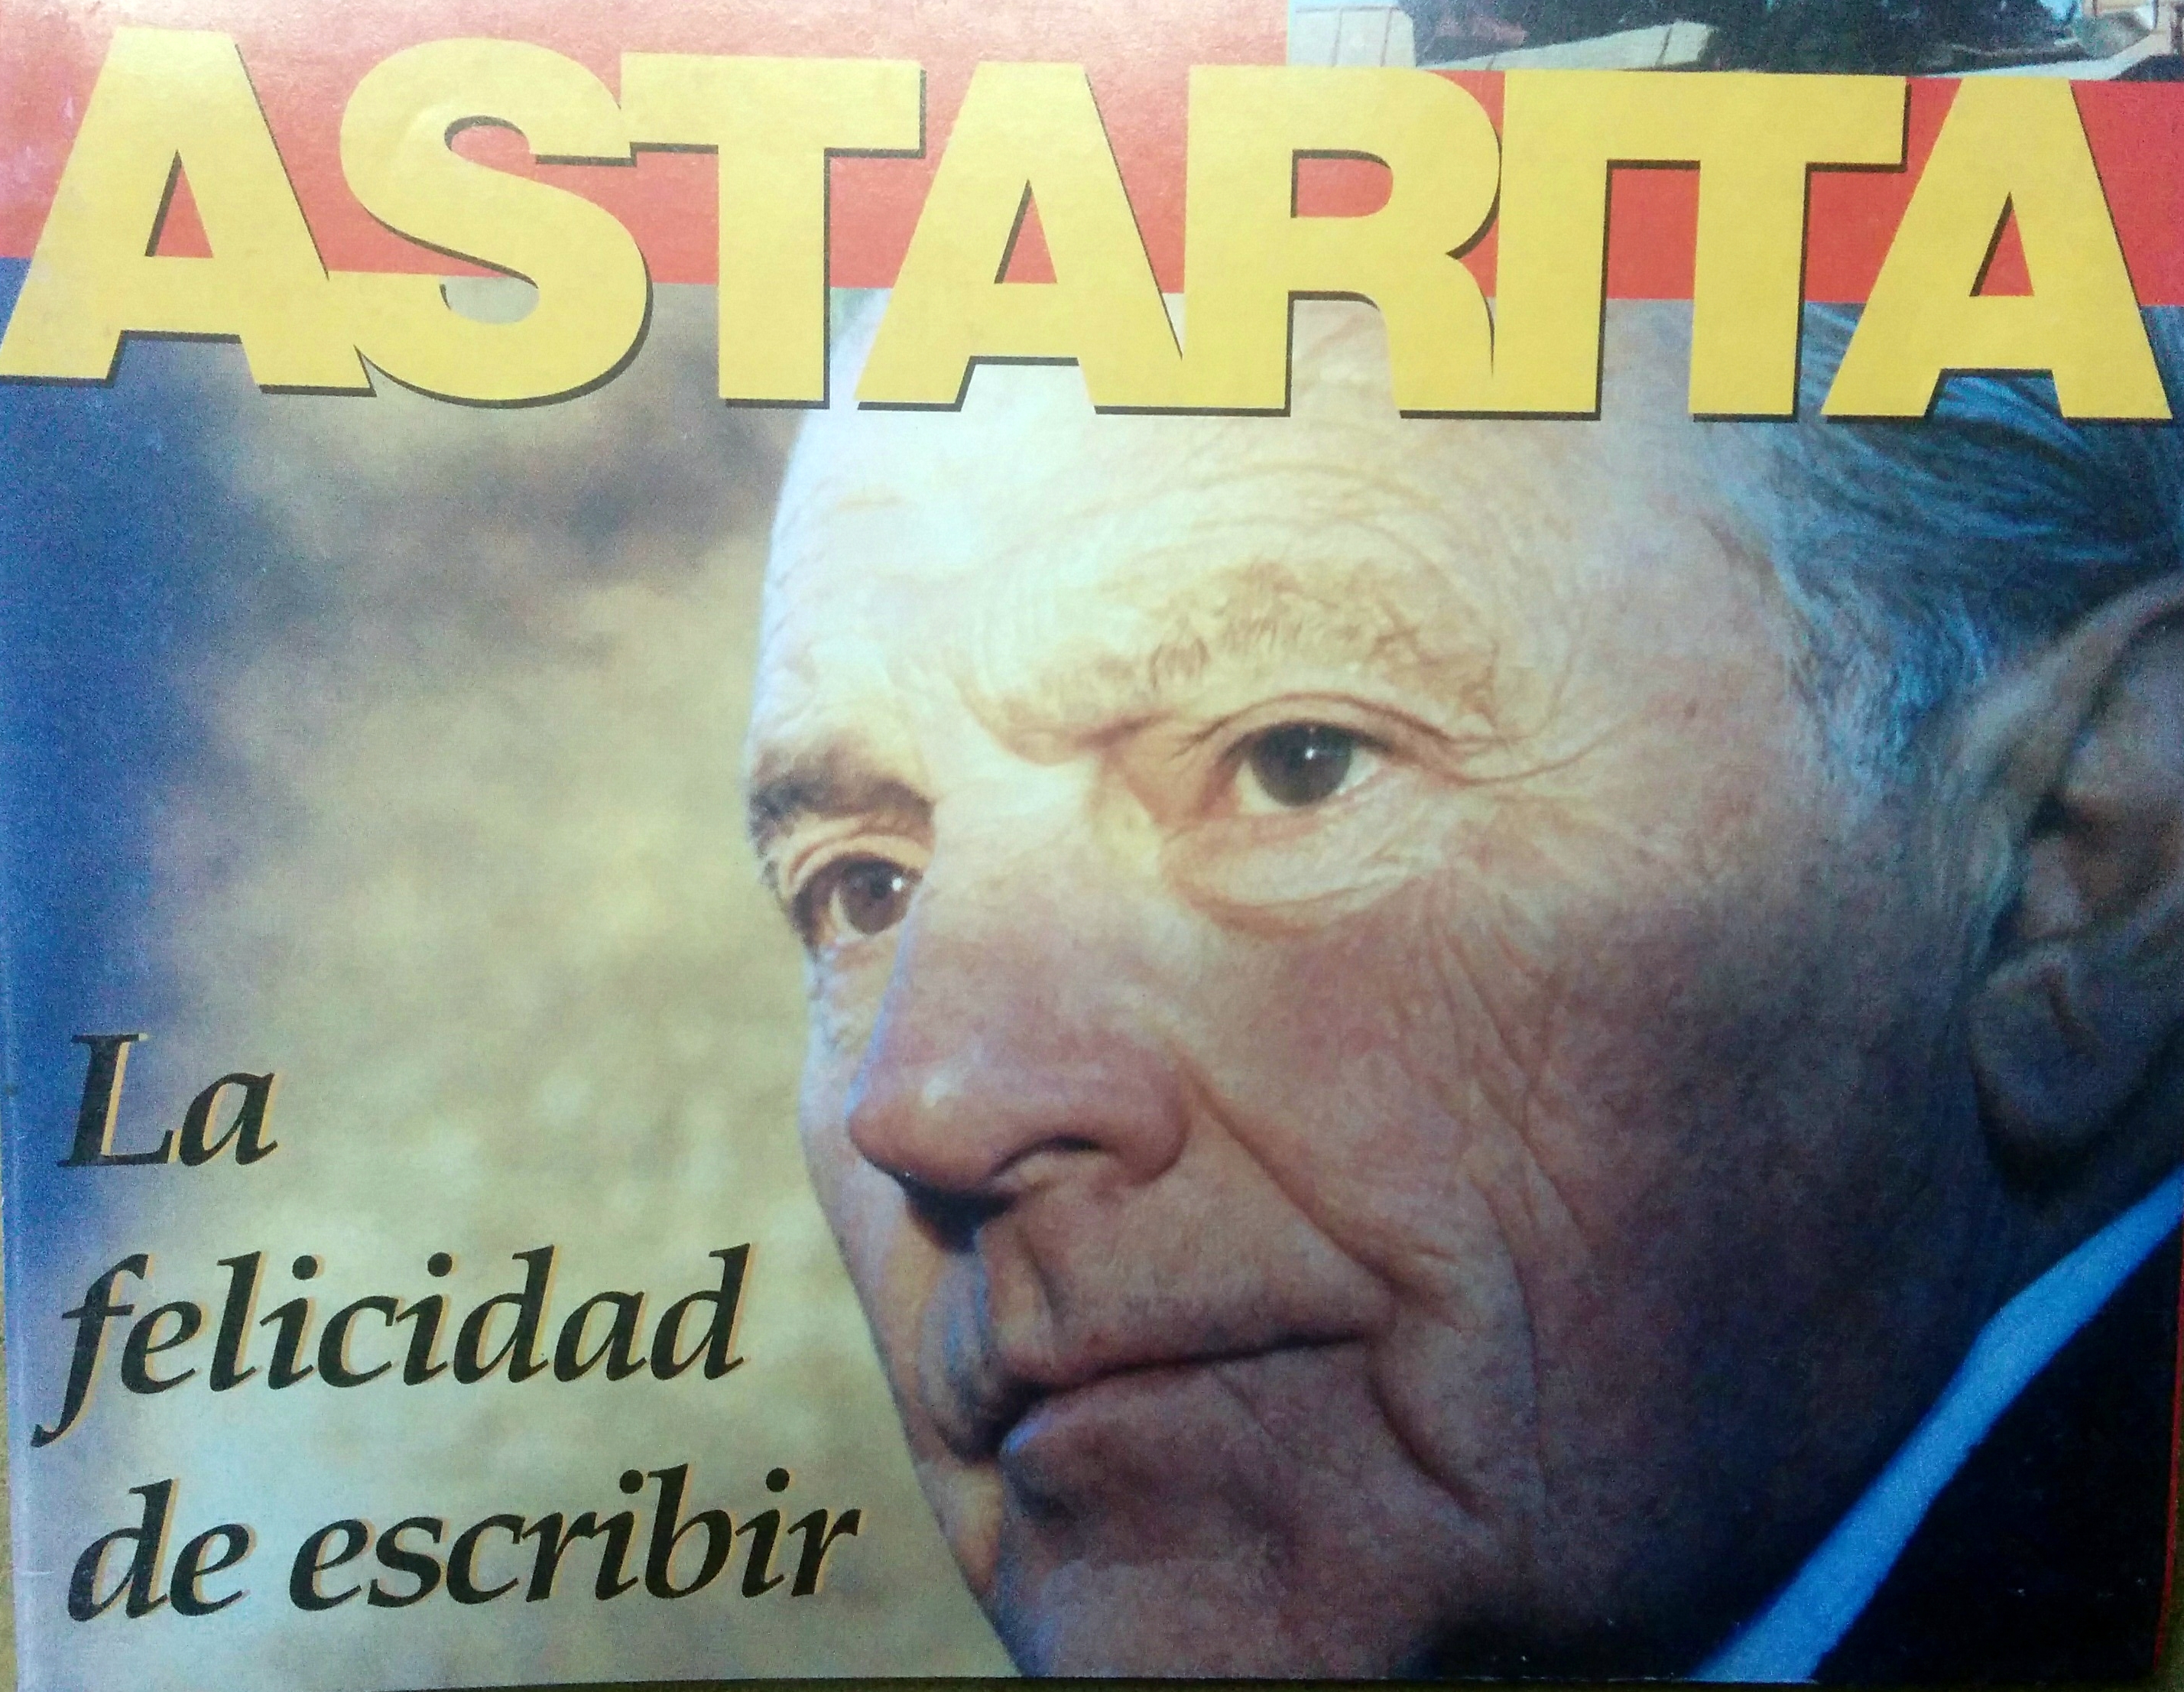 El escritor, periodista e investigador, Gaspar José Astarita (1928-2003).